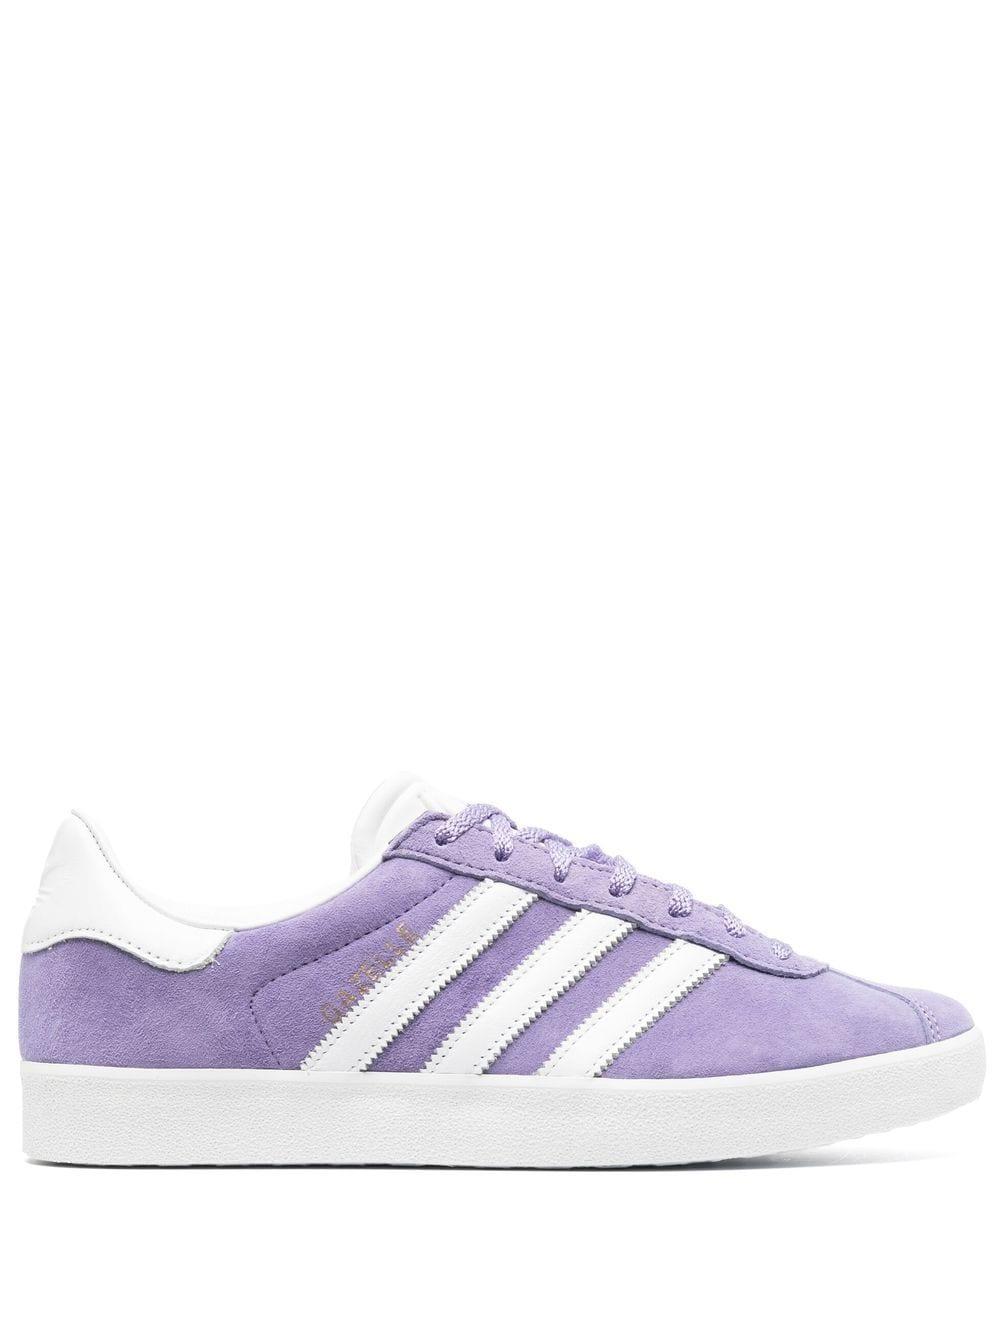 adidas Originals Gazelle Suede Sneakers in Purple | Lyst